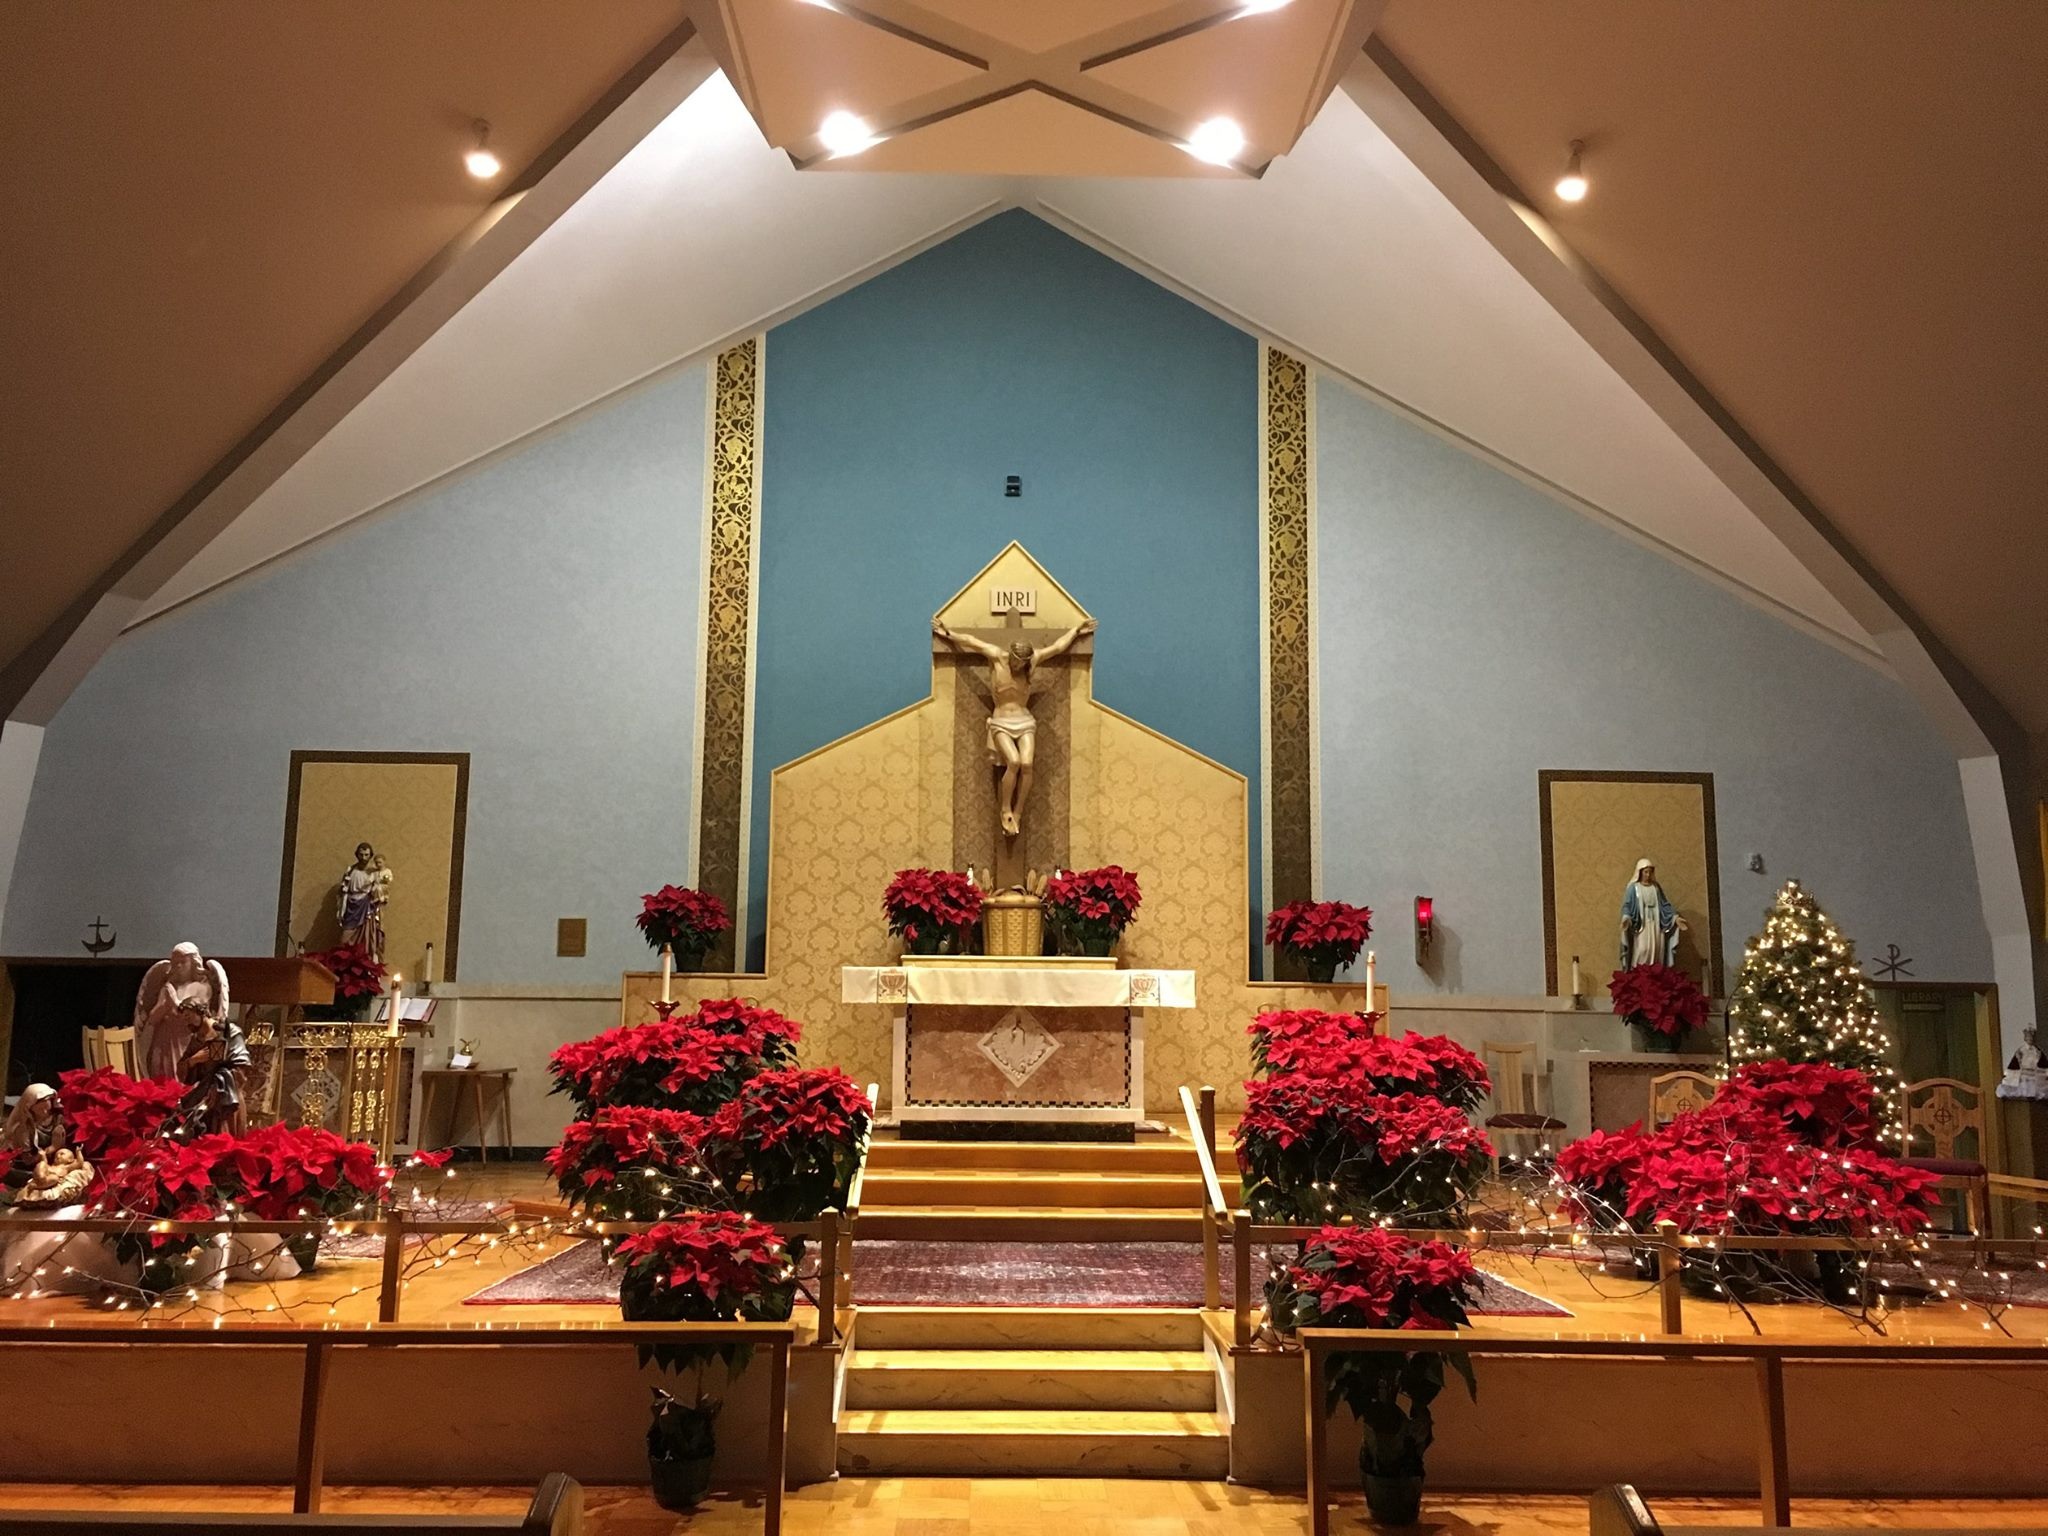  Welcome to   Saint Marianne Cope Parish    The Catholic Community of Lakeland &amp; Solvay    JOIN US FOR MASS  